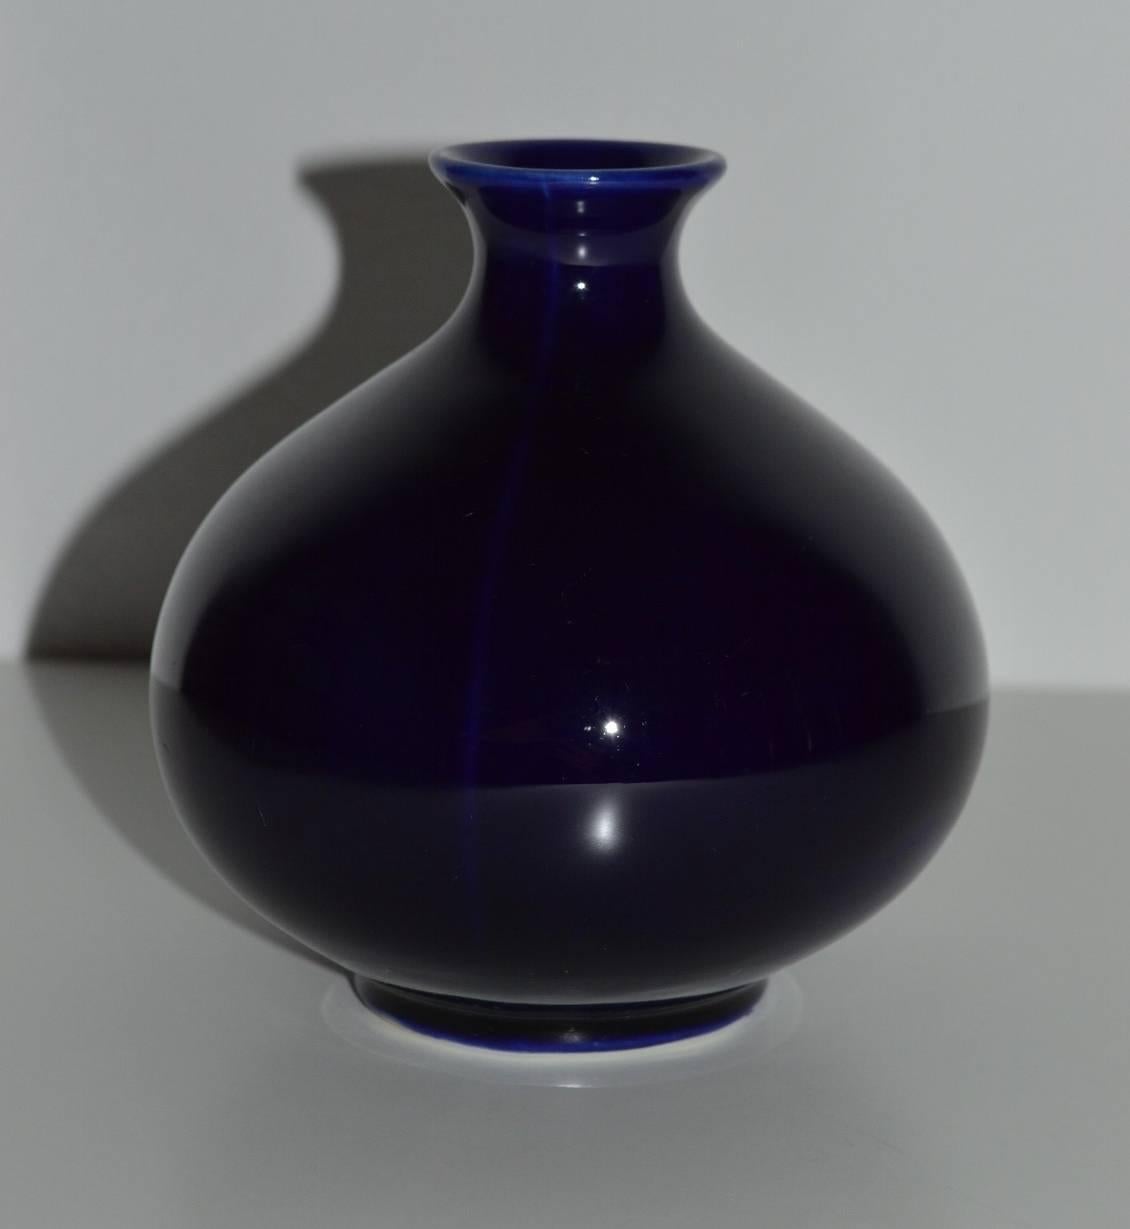 Beautiful vase designed and made by Guido Andlovitz for Societa' Ceramica Italiana di Laveno (S.C.I.), Lavenia, Italy, circa 1930s.
Ceramic vase with stunning shiny night blue surface finish (glaze), seems to be 